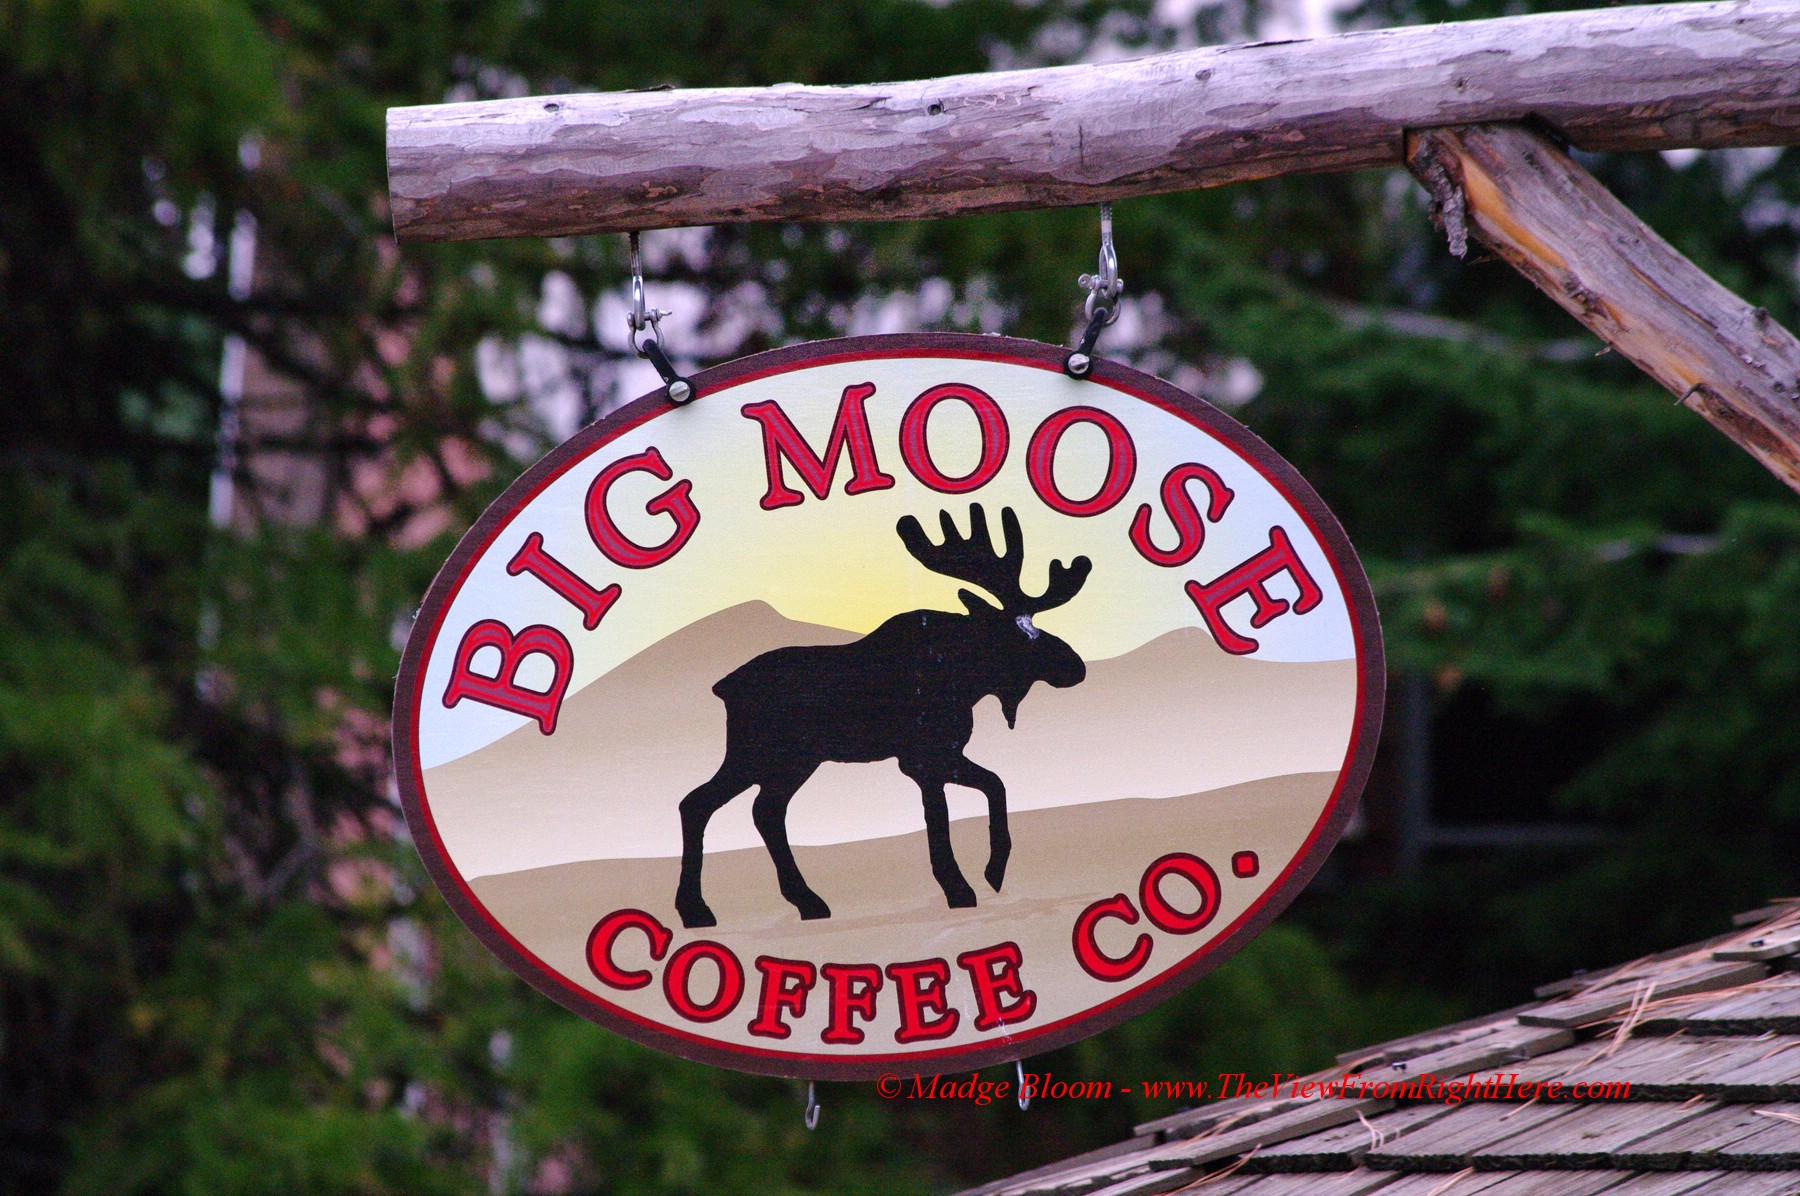 Big Moose Coffee Company